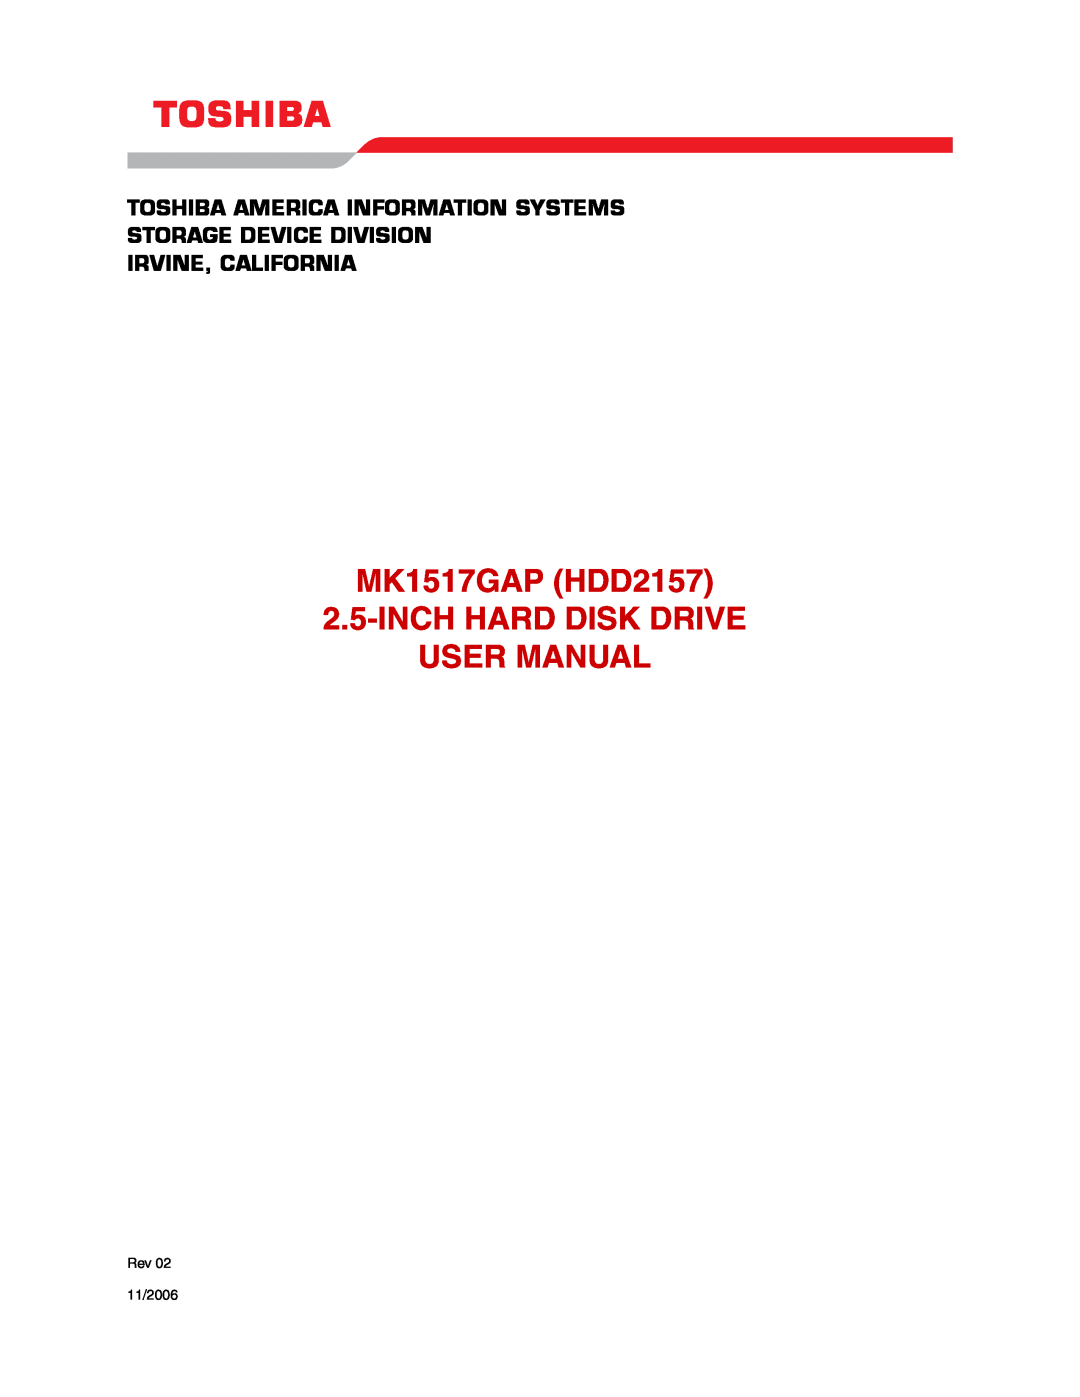 Toshiba MK1517GAP (HDD2157) user manual MK1517GAP HDD2157 2.5-INCH HARD DISK DRIVE USER MANUAL, Irvine, California 